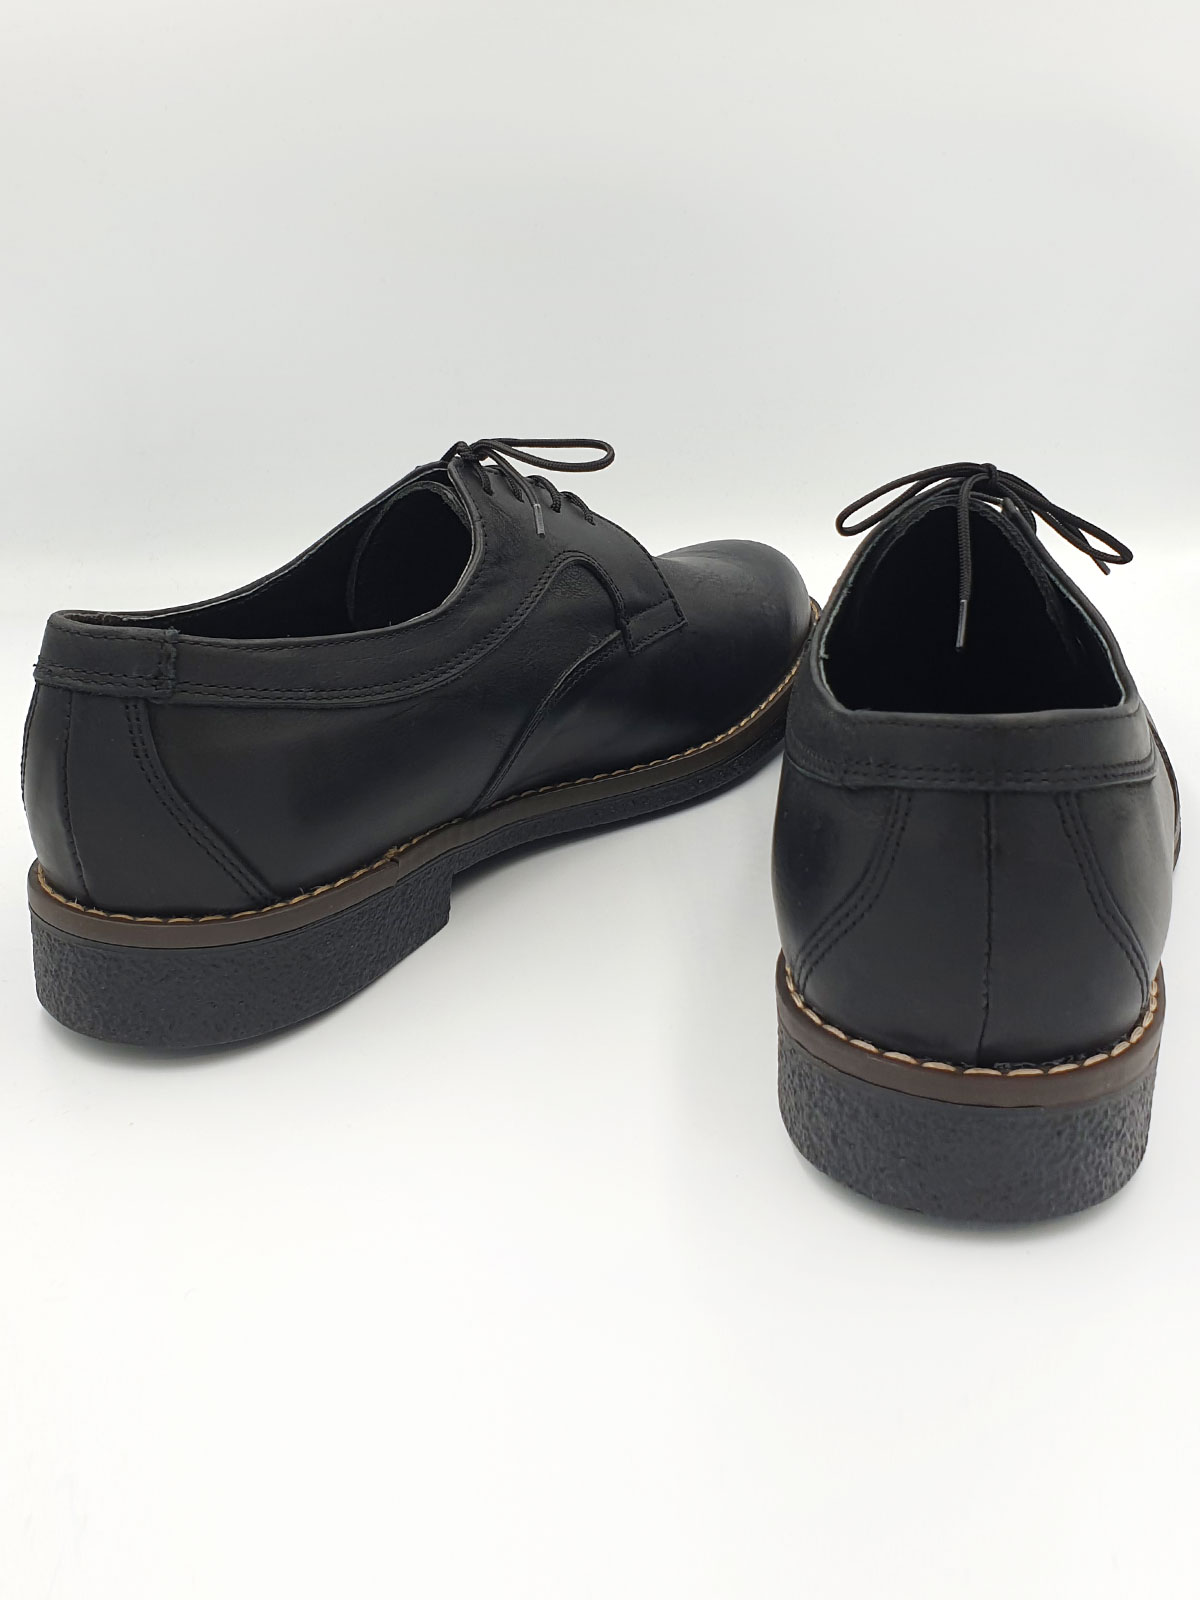  sporty elegant shoes in black  - 81084 - € 50.00 img2